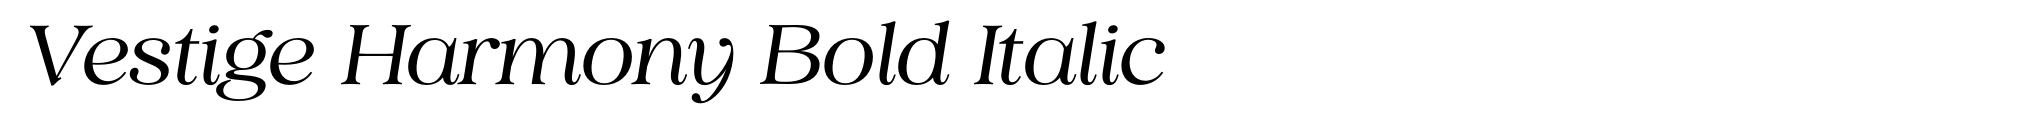 Vestige Harmony Bold Italic image